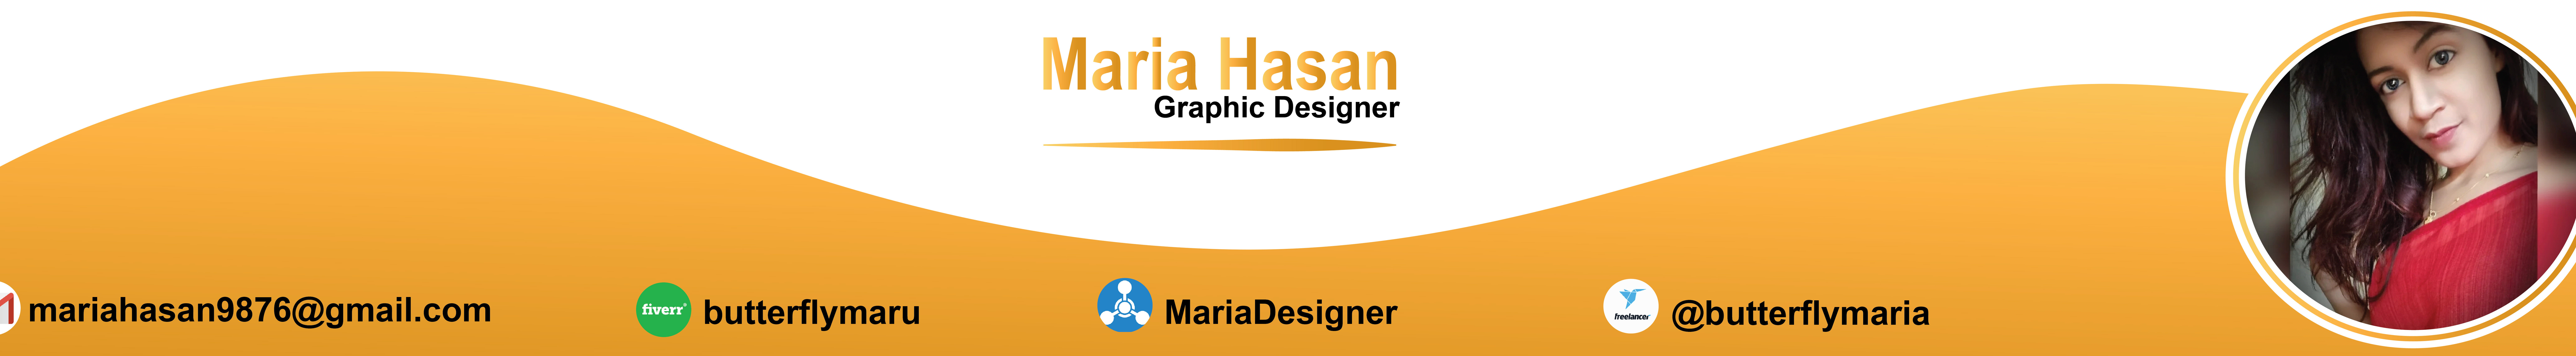 Maria Hasan's profile banner